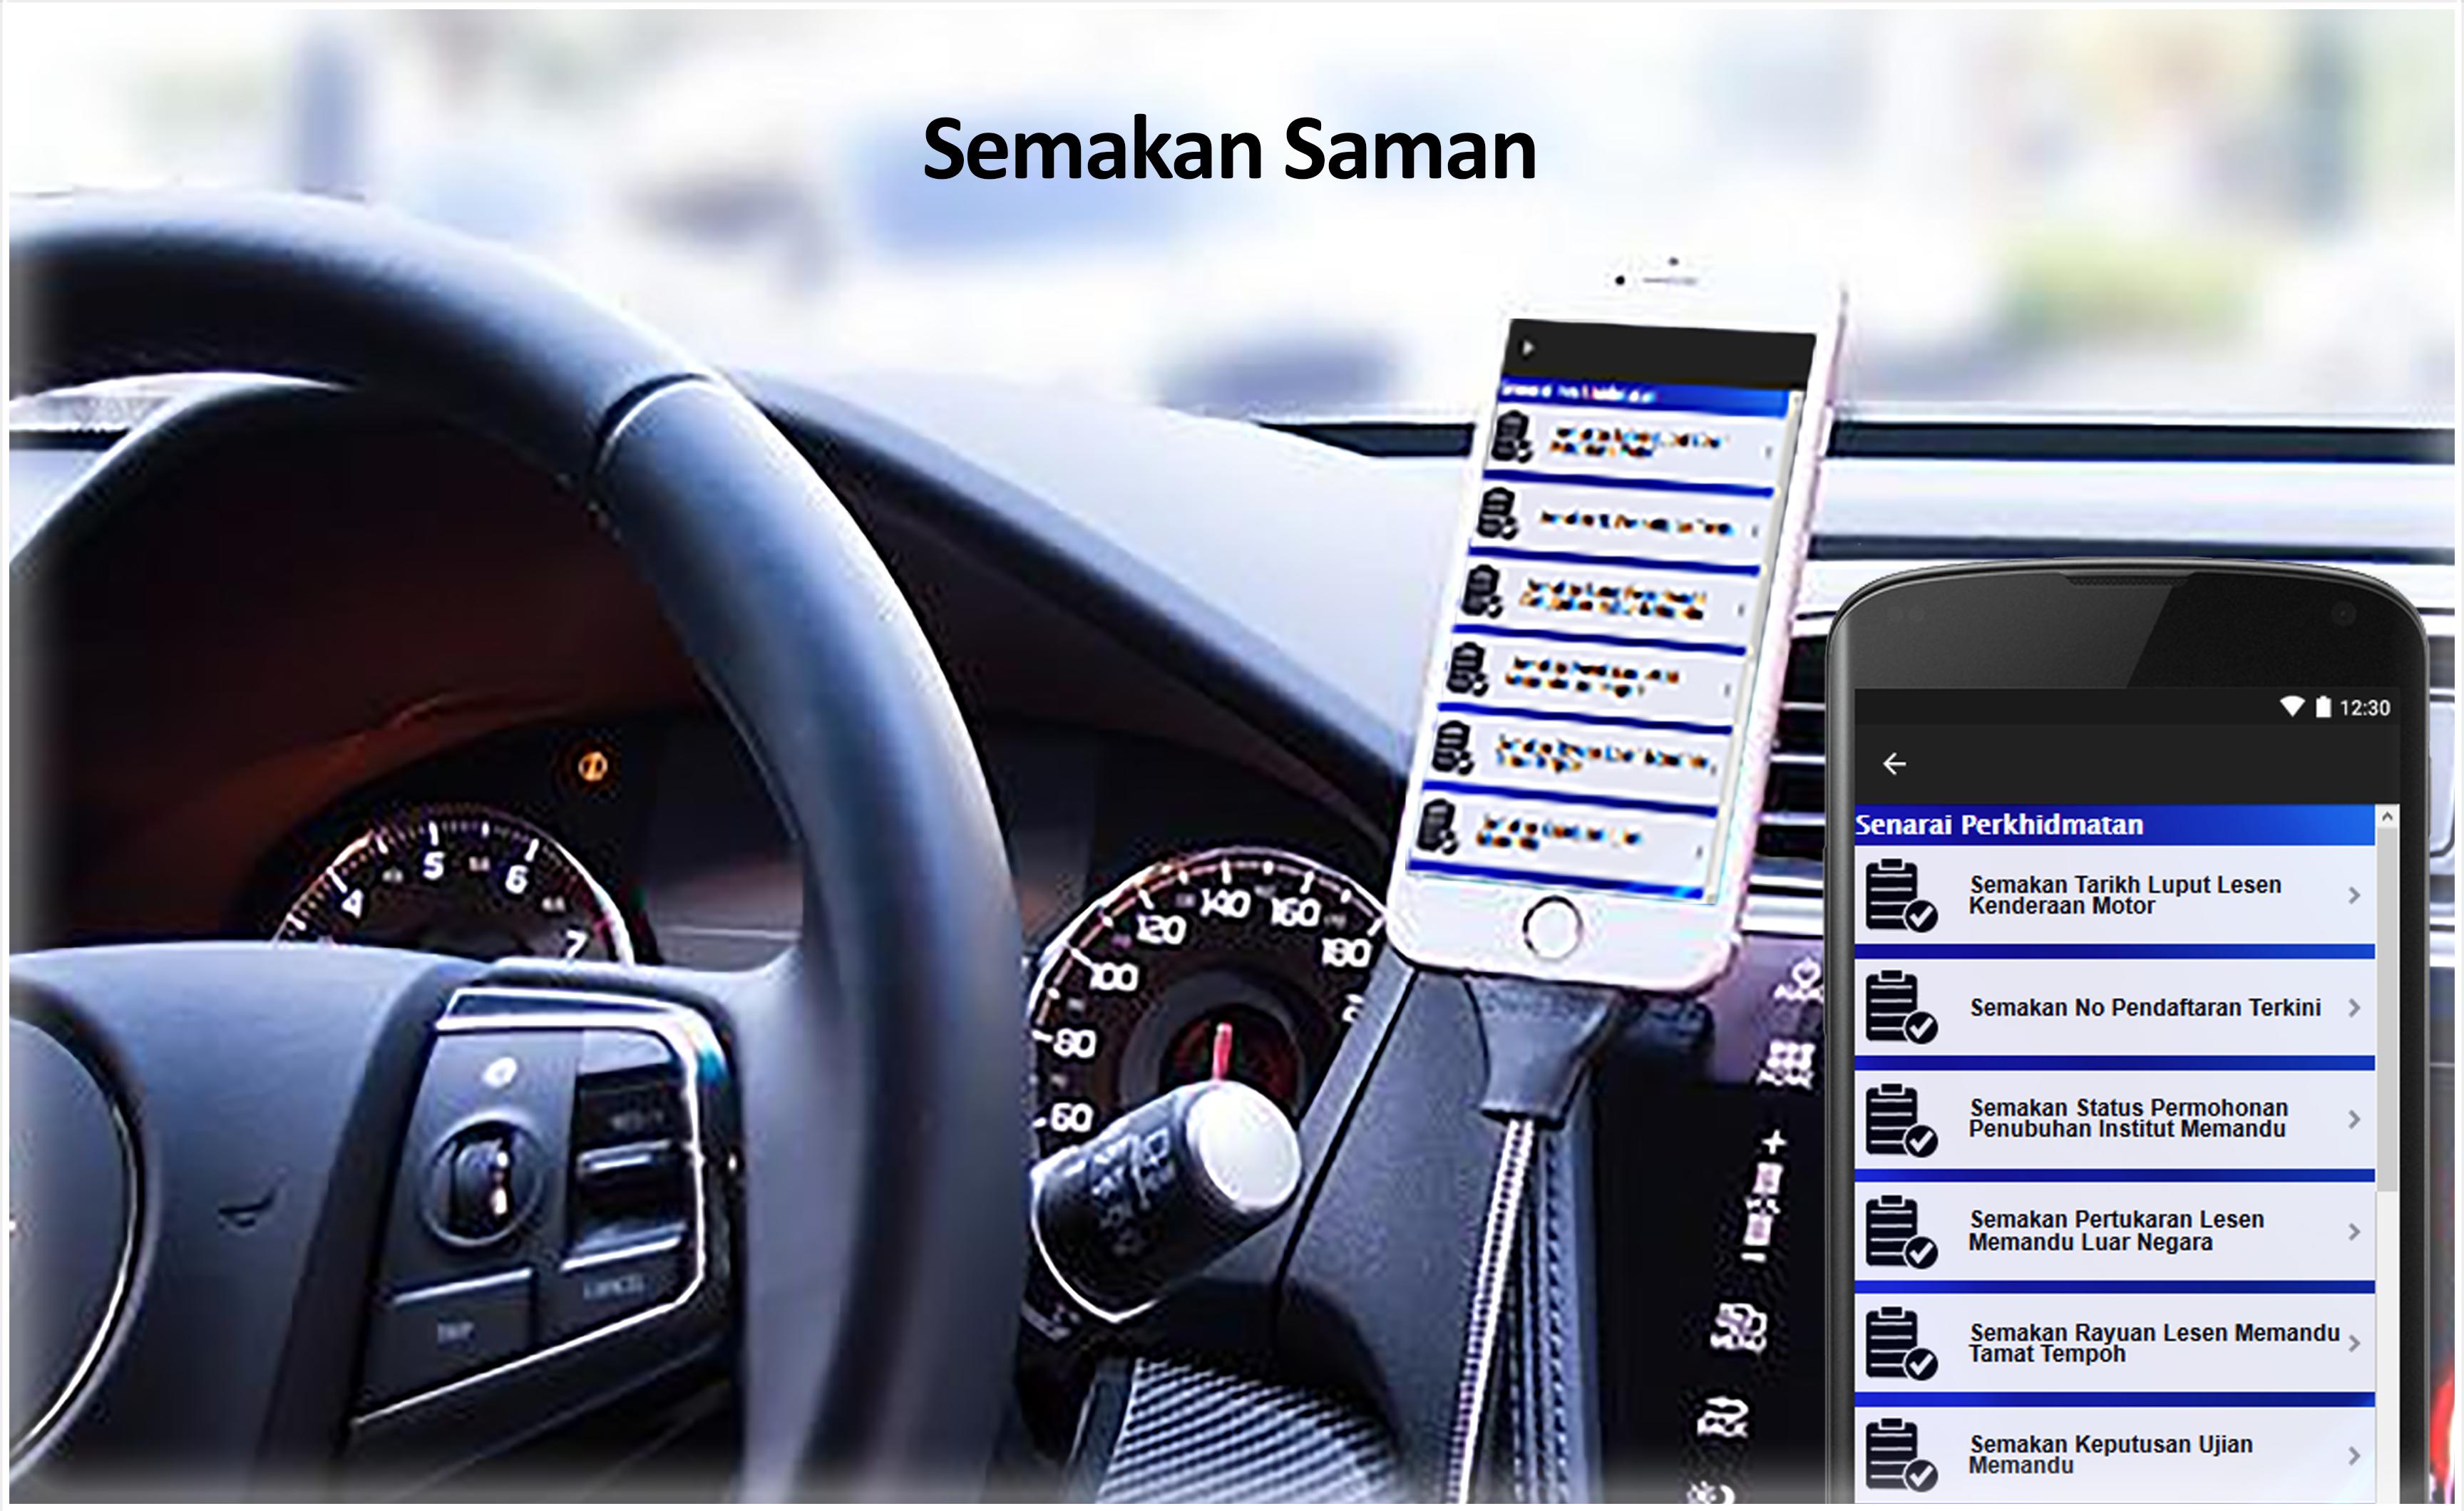 Semakan Saman For Android Apk Download